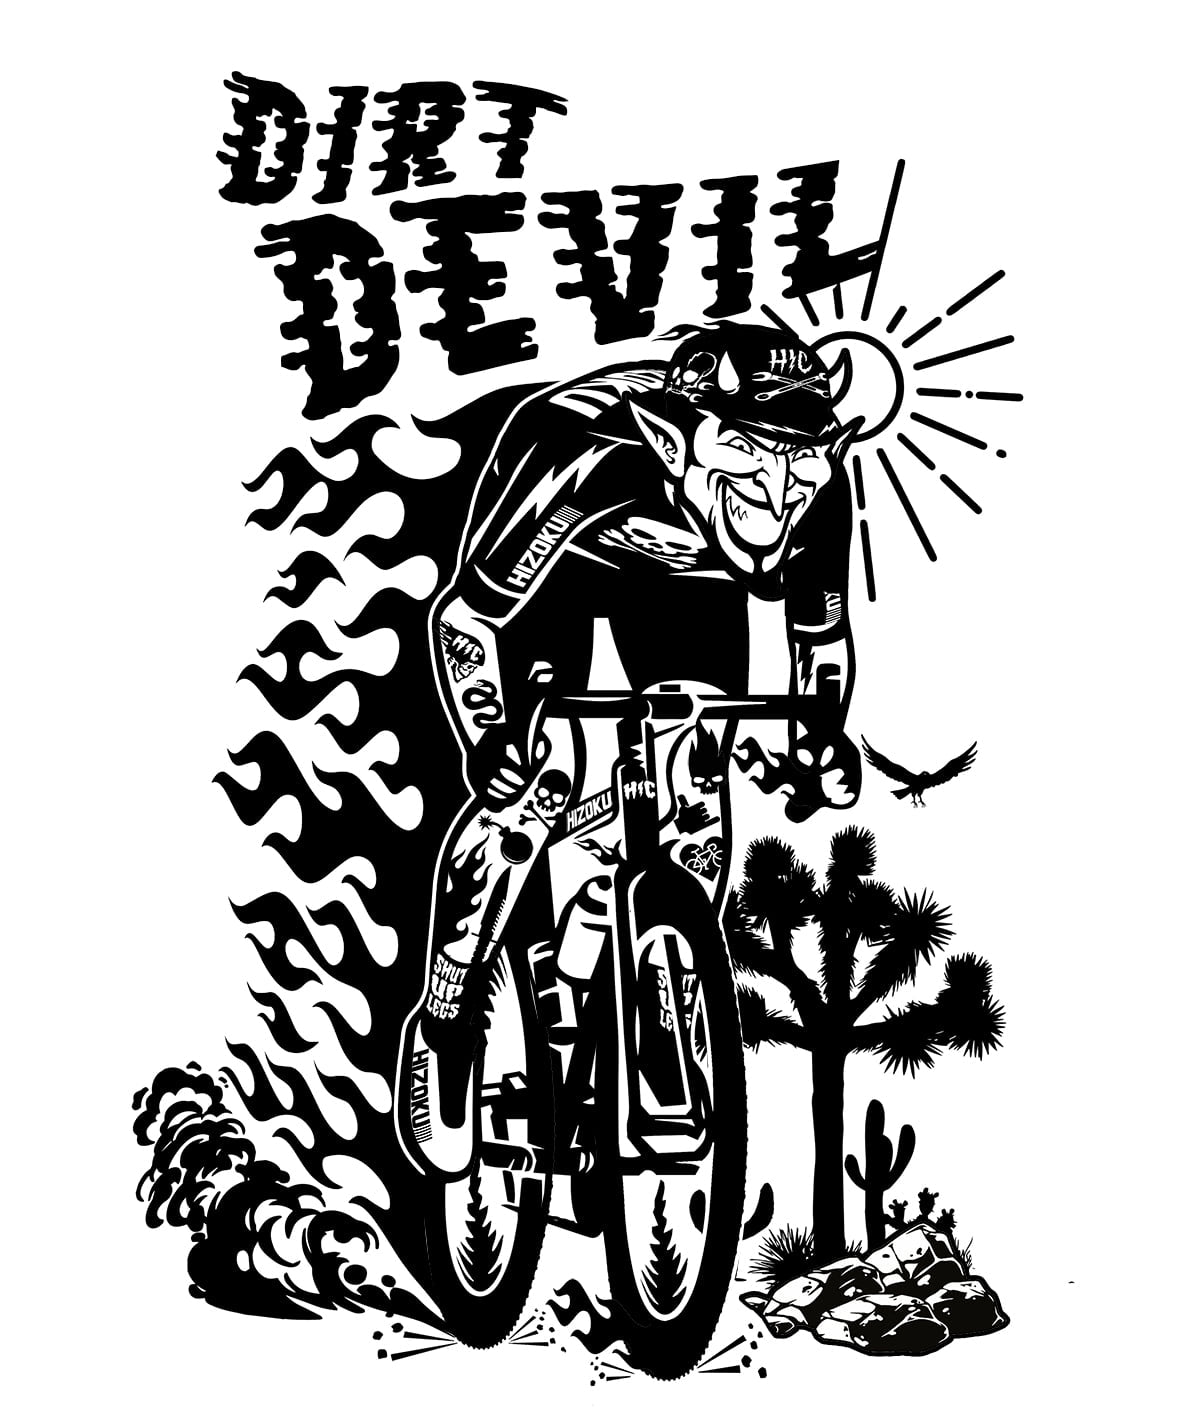 "Dirt Devil" Black & White 13 x 19 Poster Print